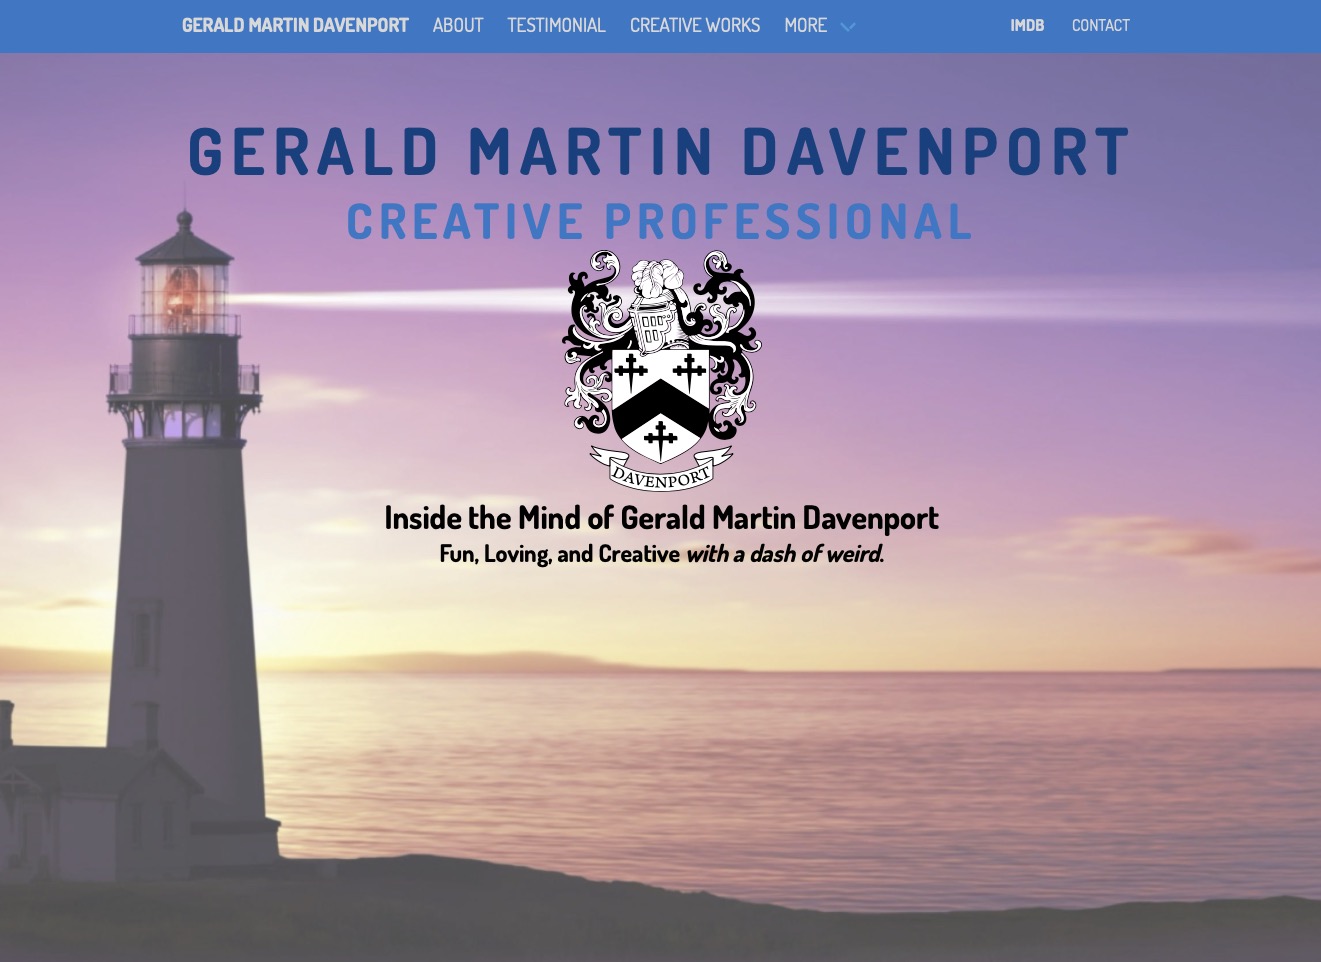 Gerald Davenport the Creative Professional website.